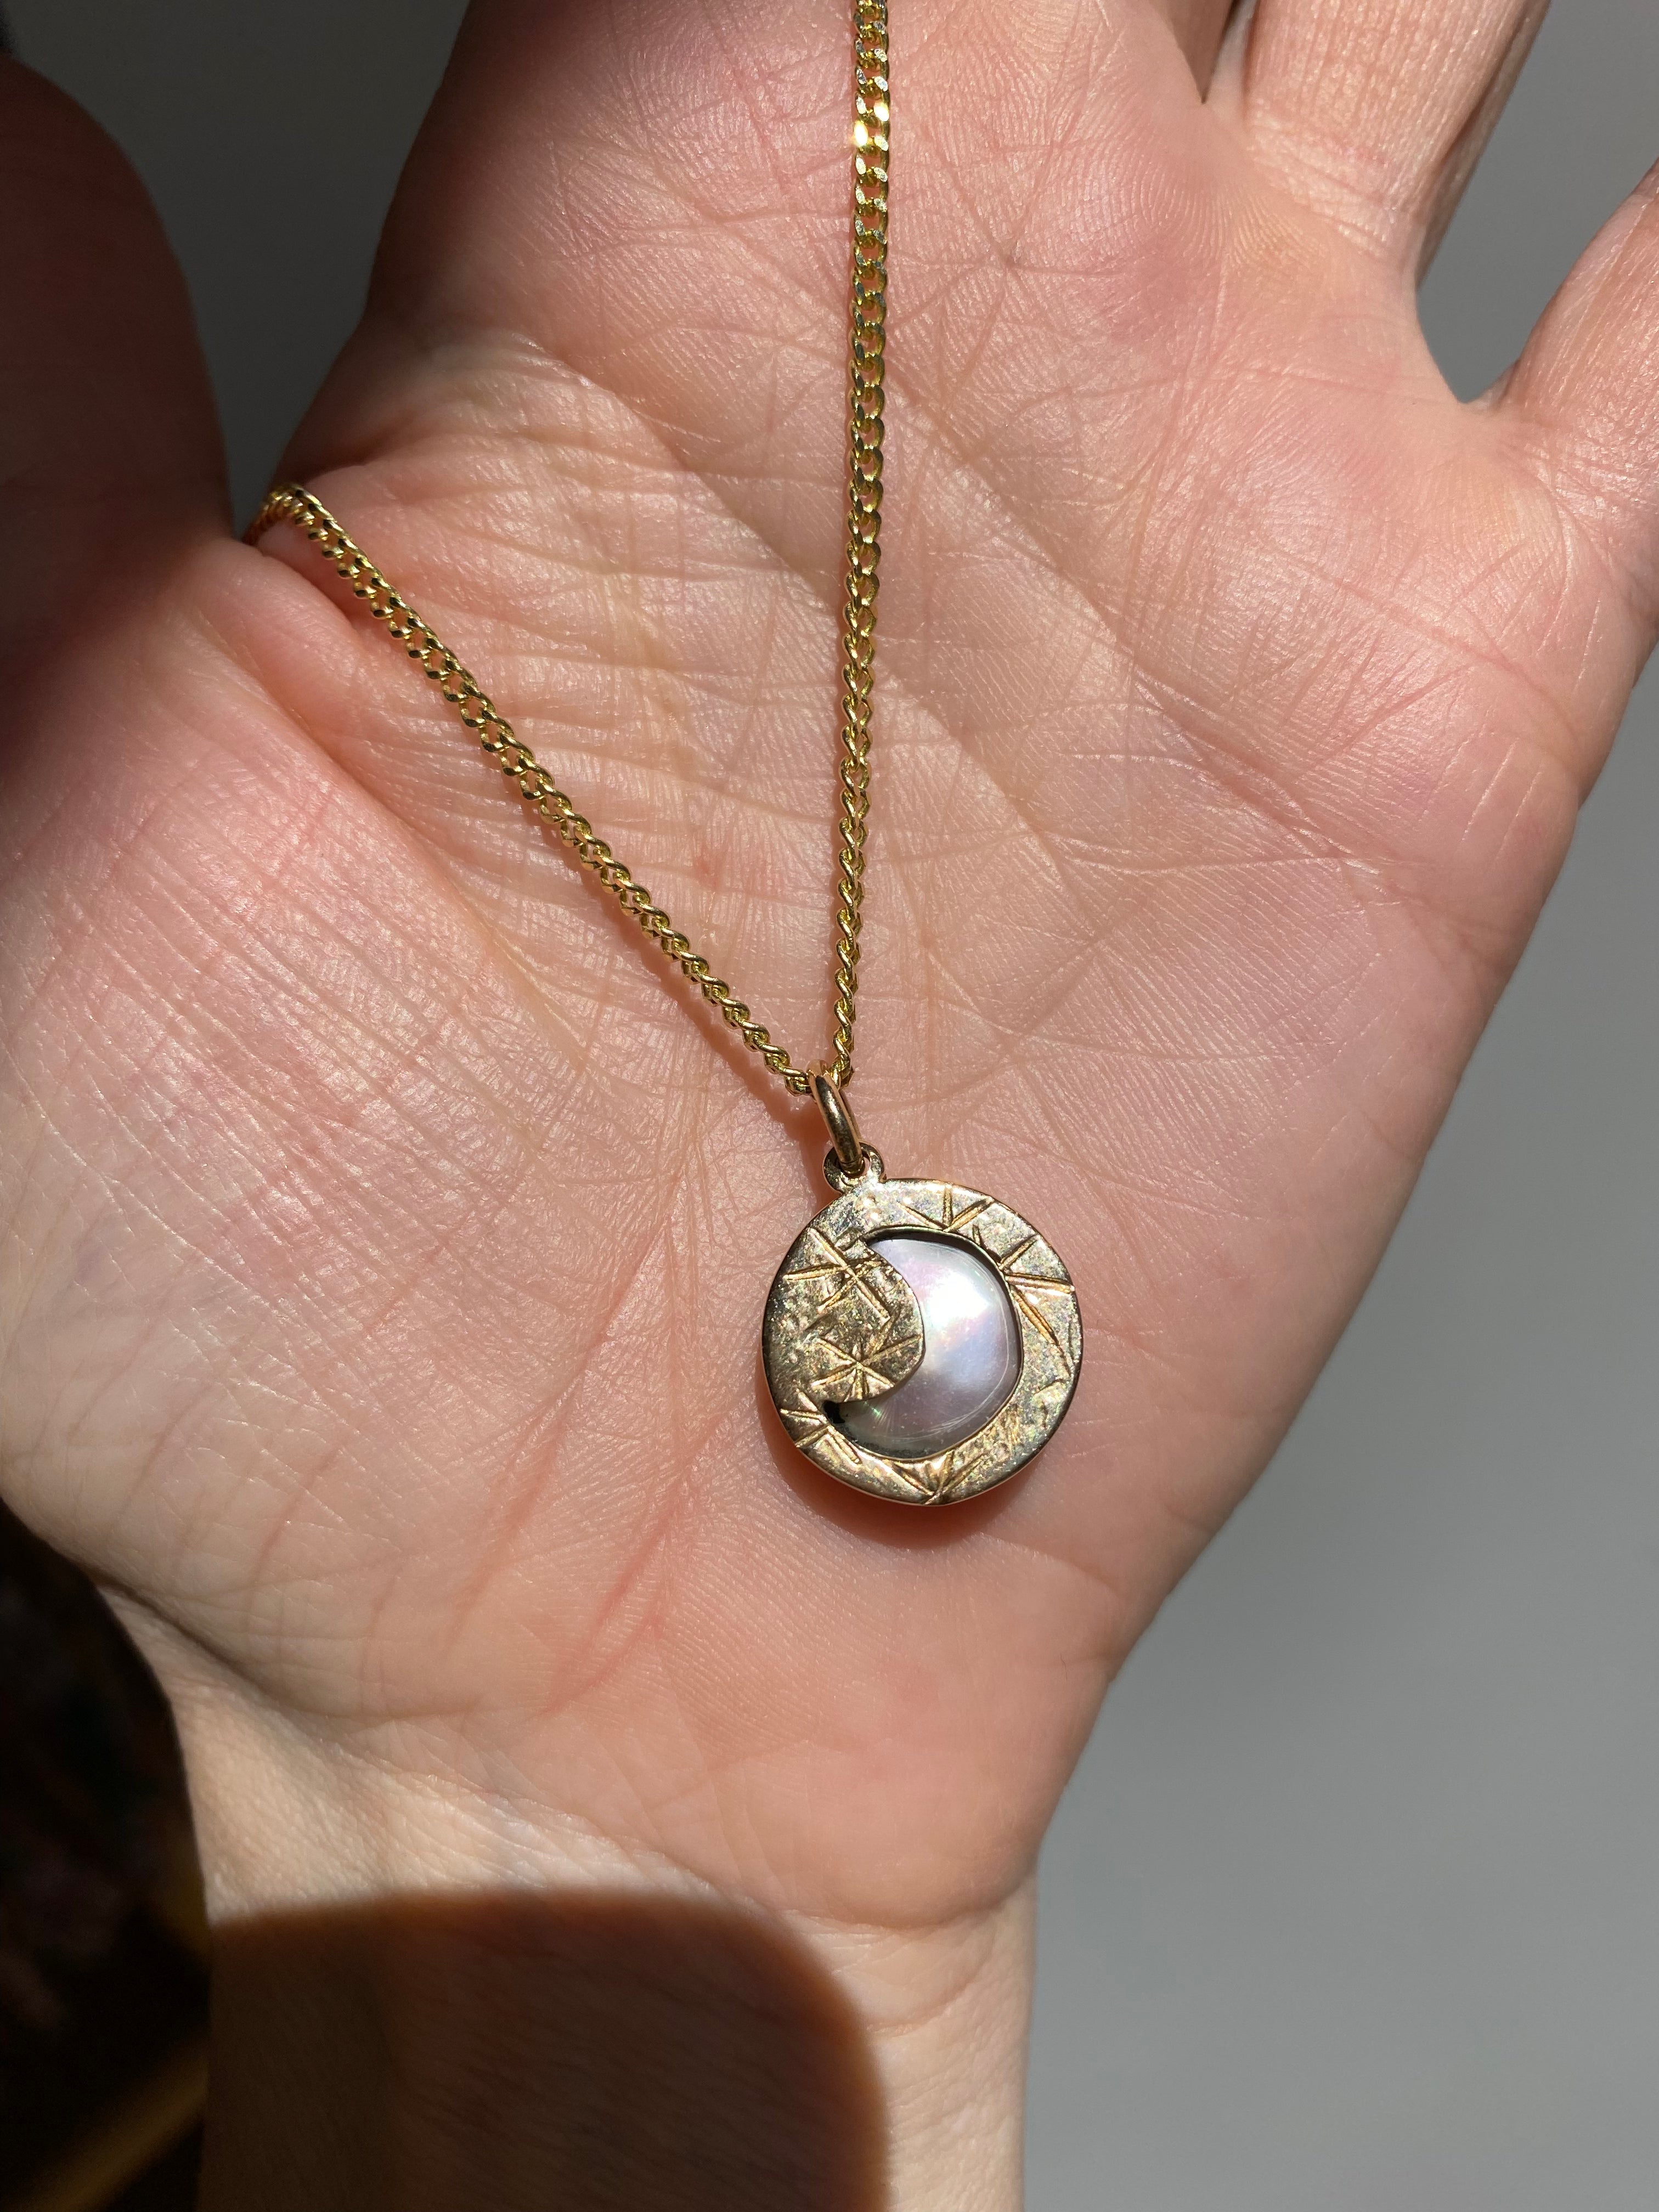 Altalune pearl necklace